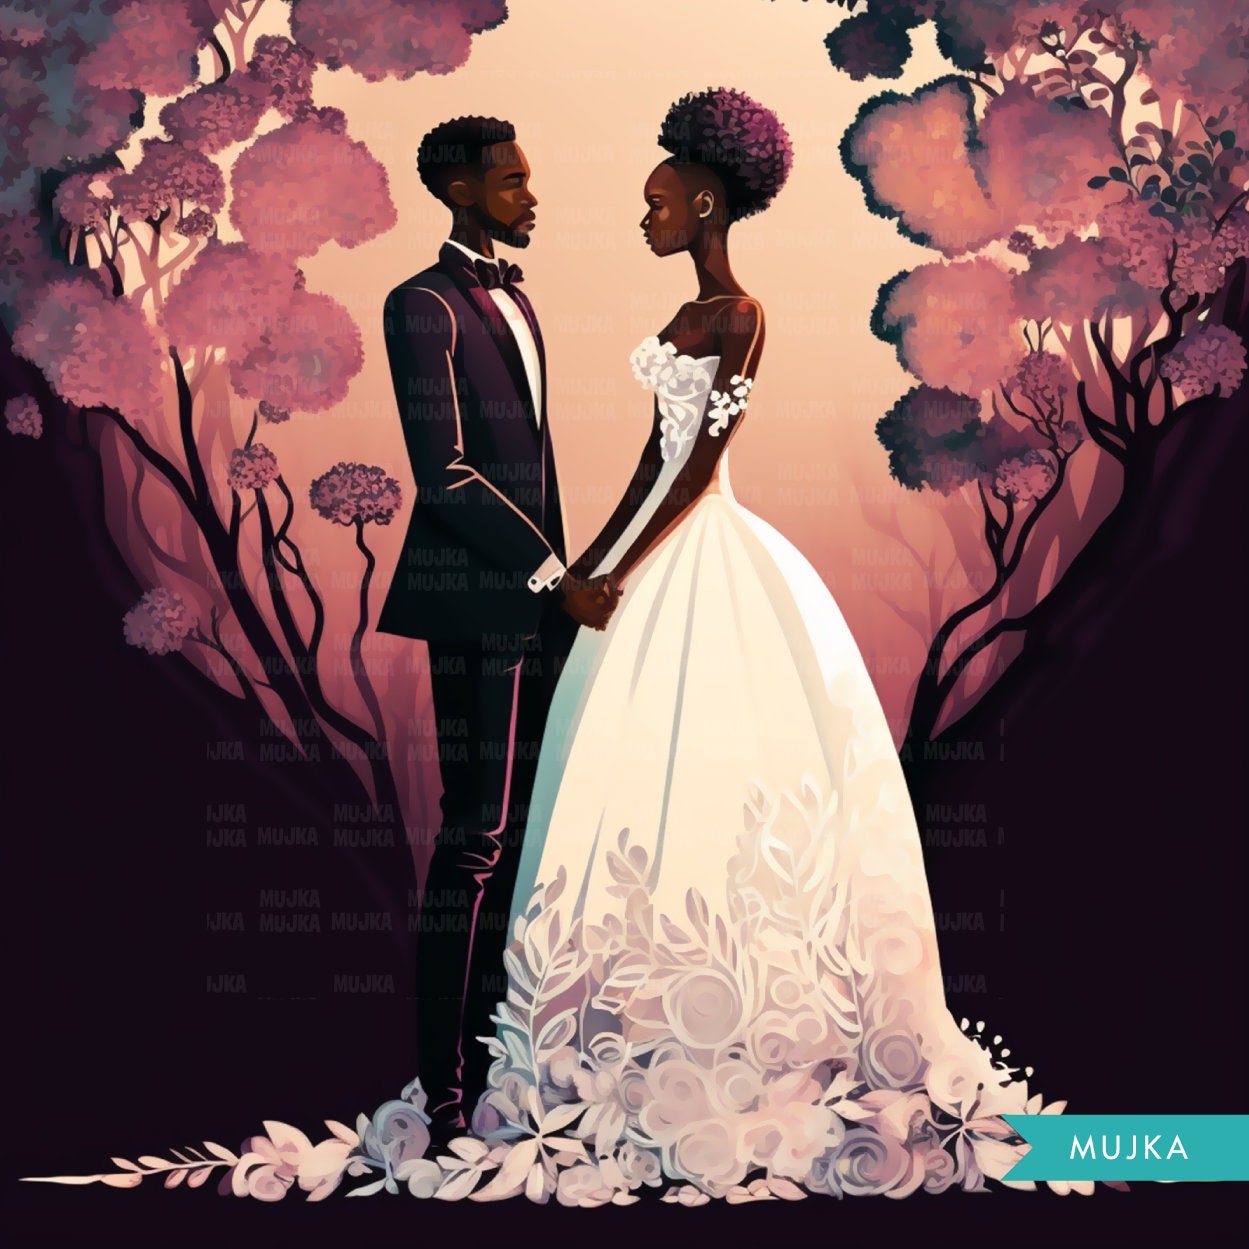 african american bride and groom clipart cartoon